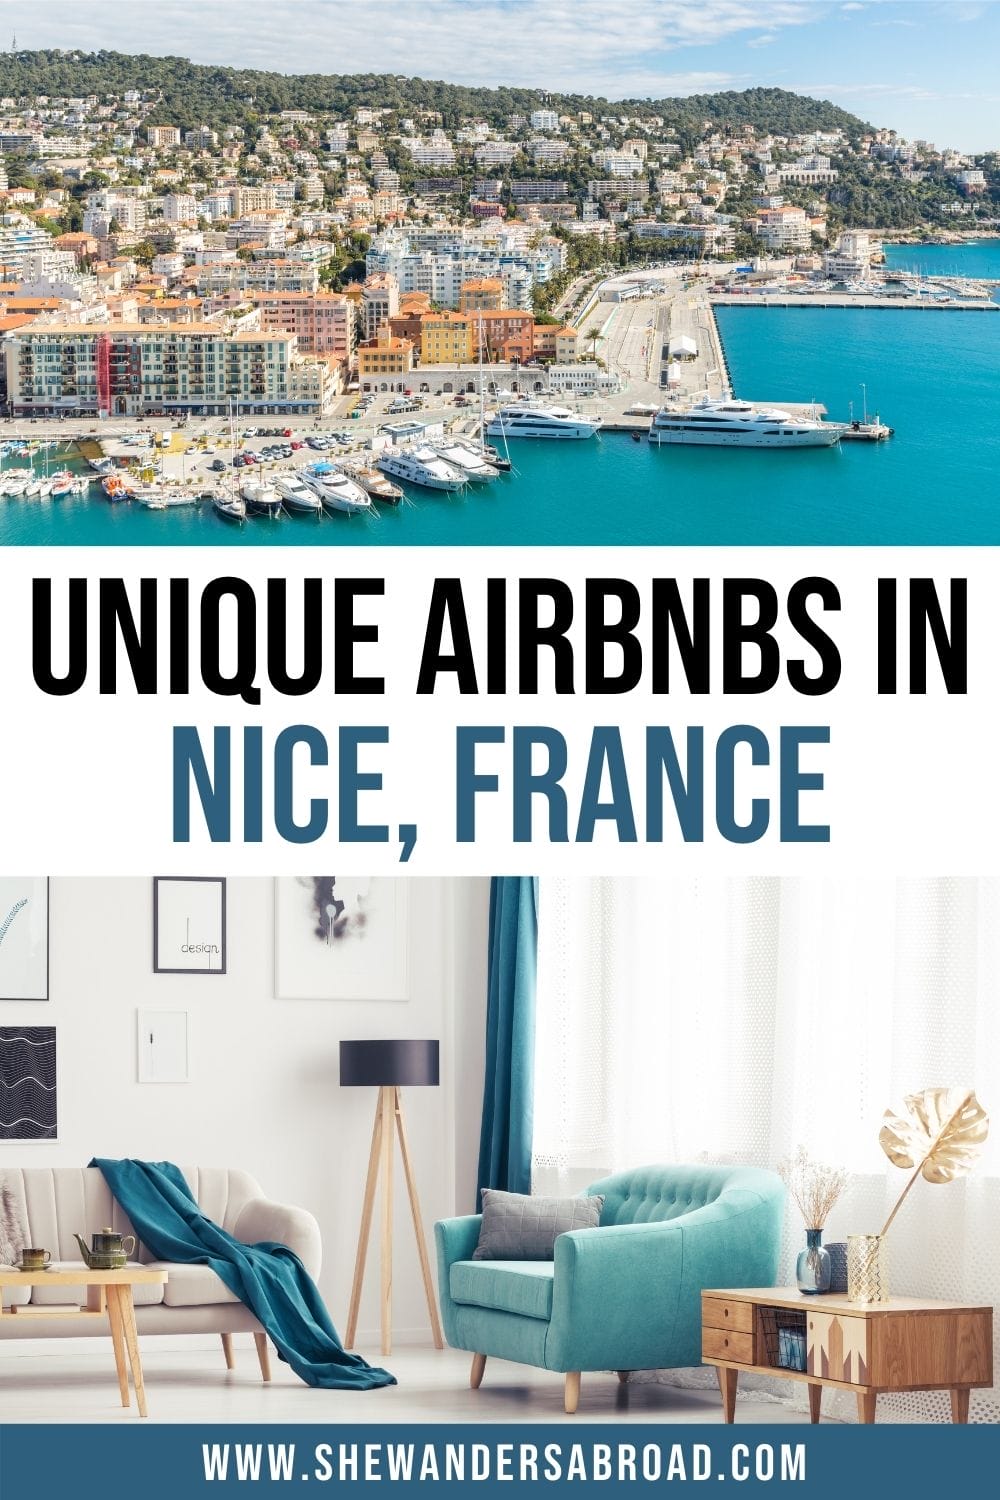 Best Airbnbs in Nice, France